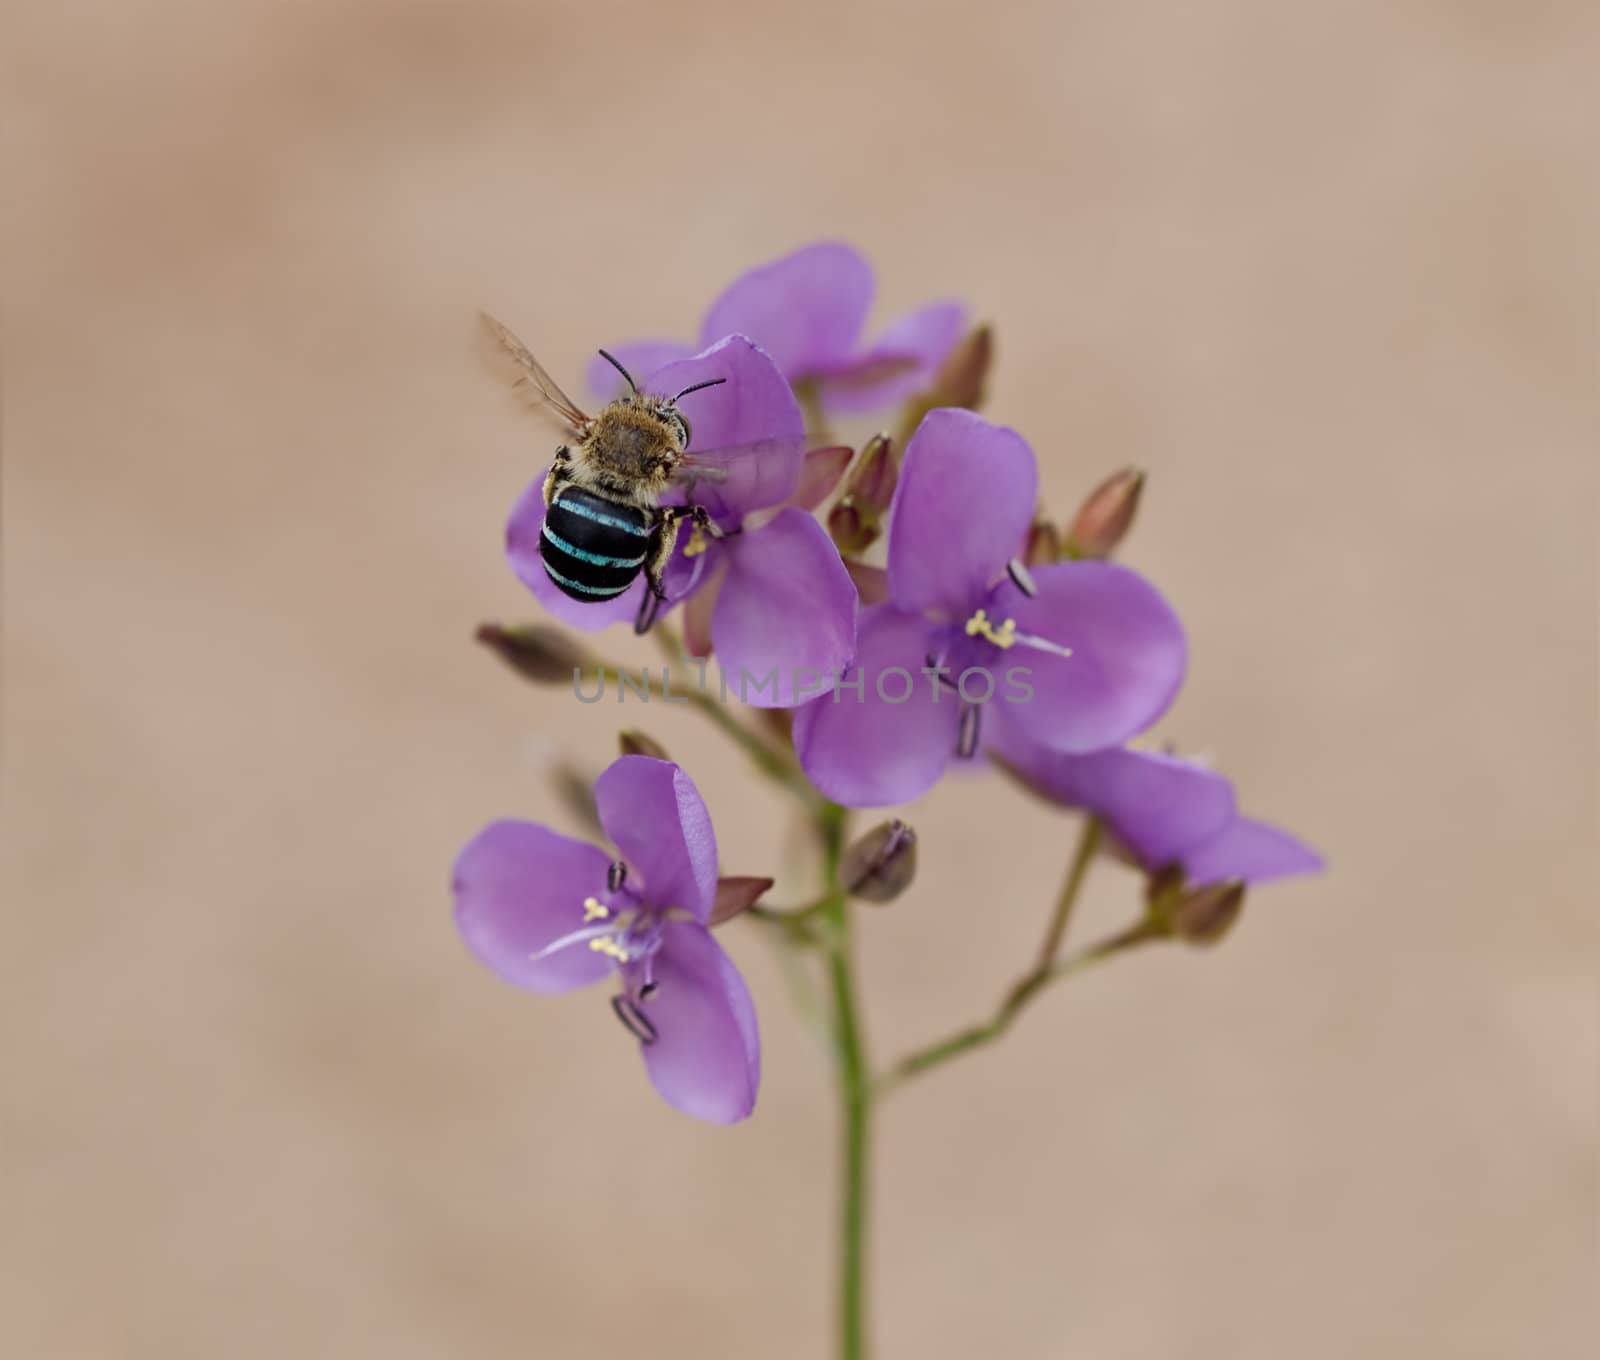 Australia biodiversity native solitary buzz bee blue banded honey bee Amagilla cingulata collecting pollen from Australian purple mauve wildflower Murdannia graminea flowers